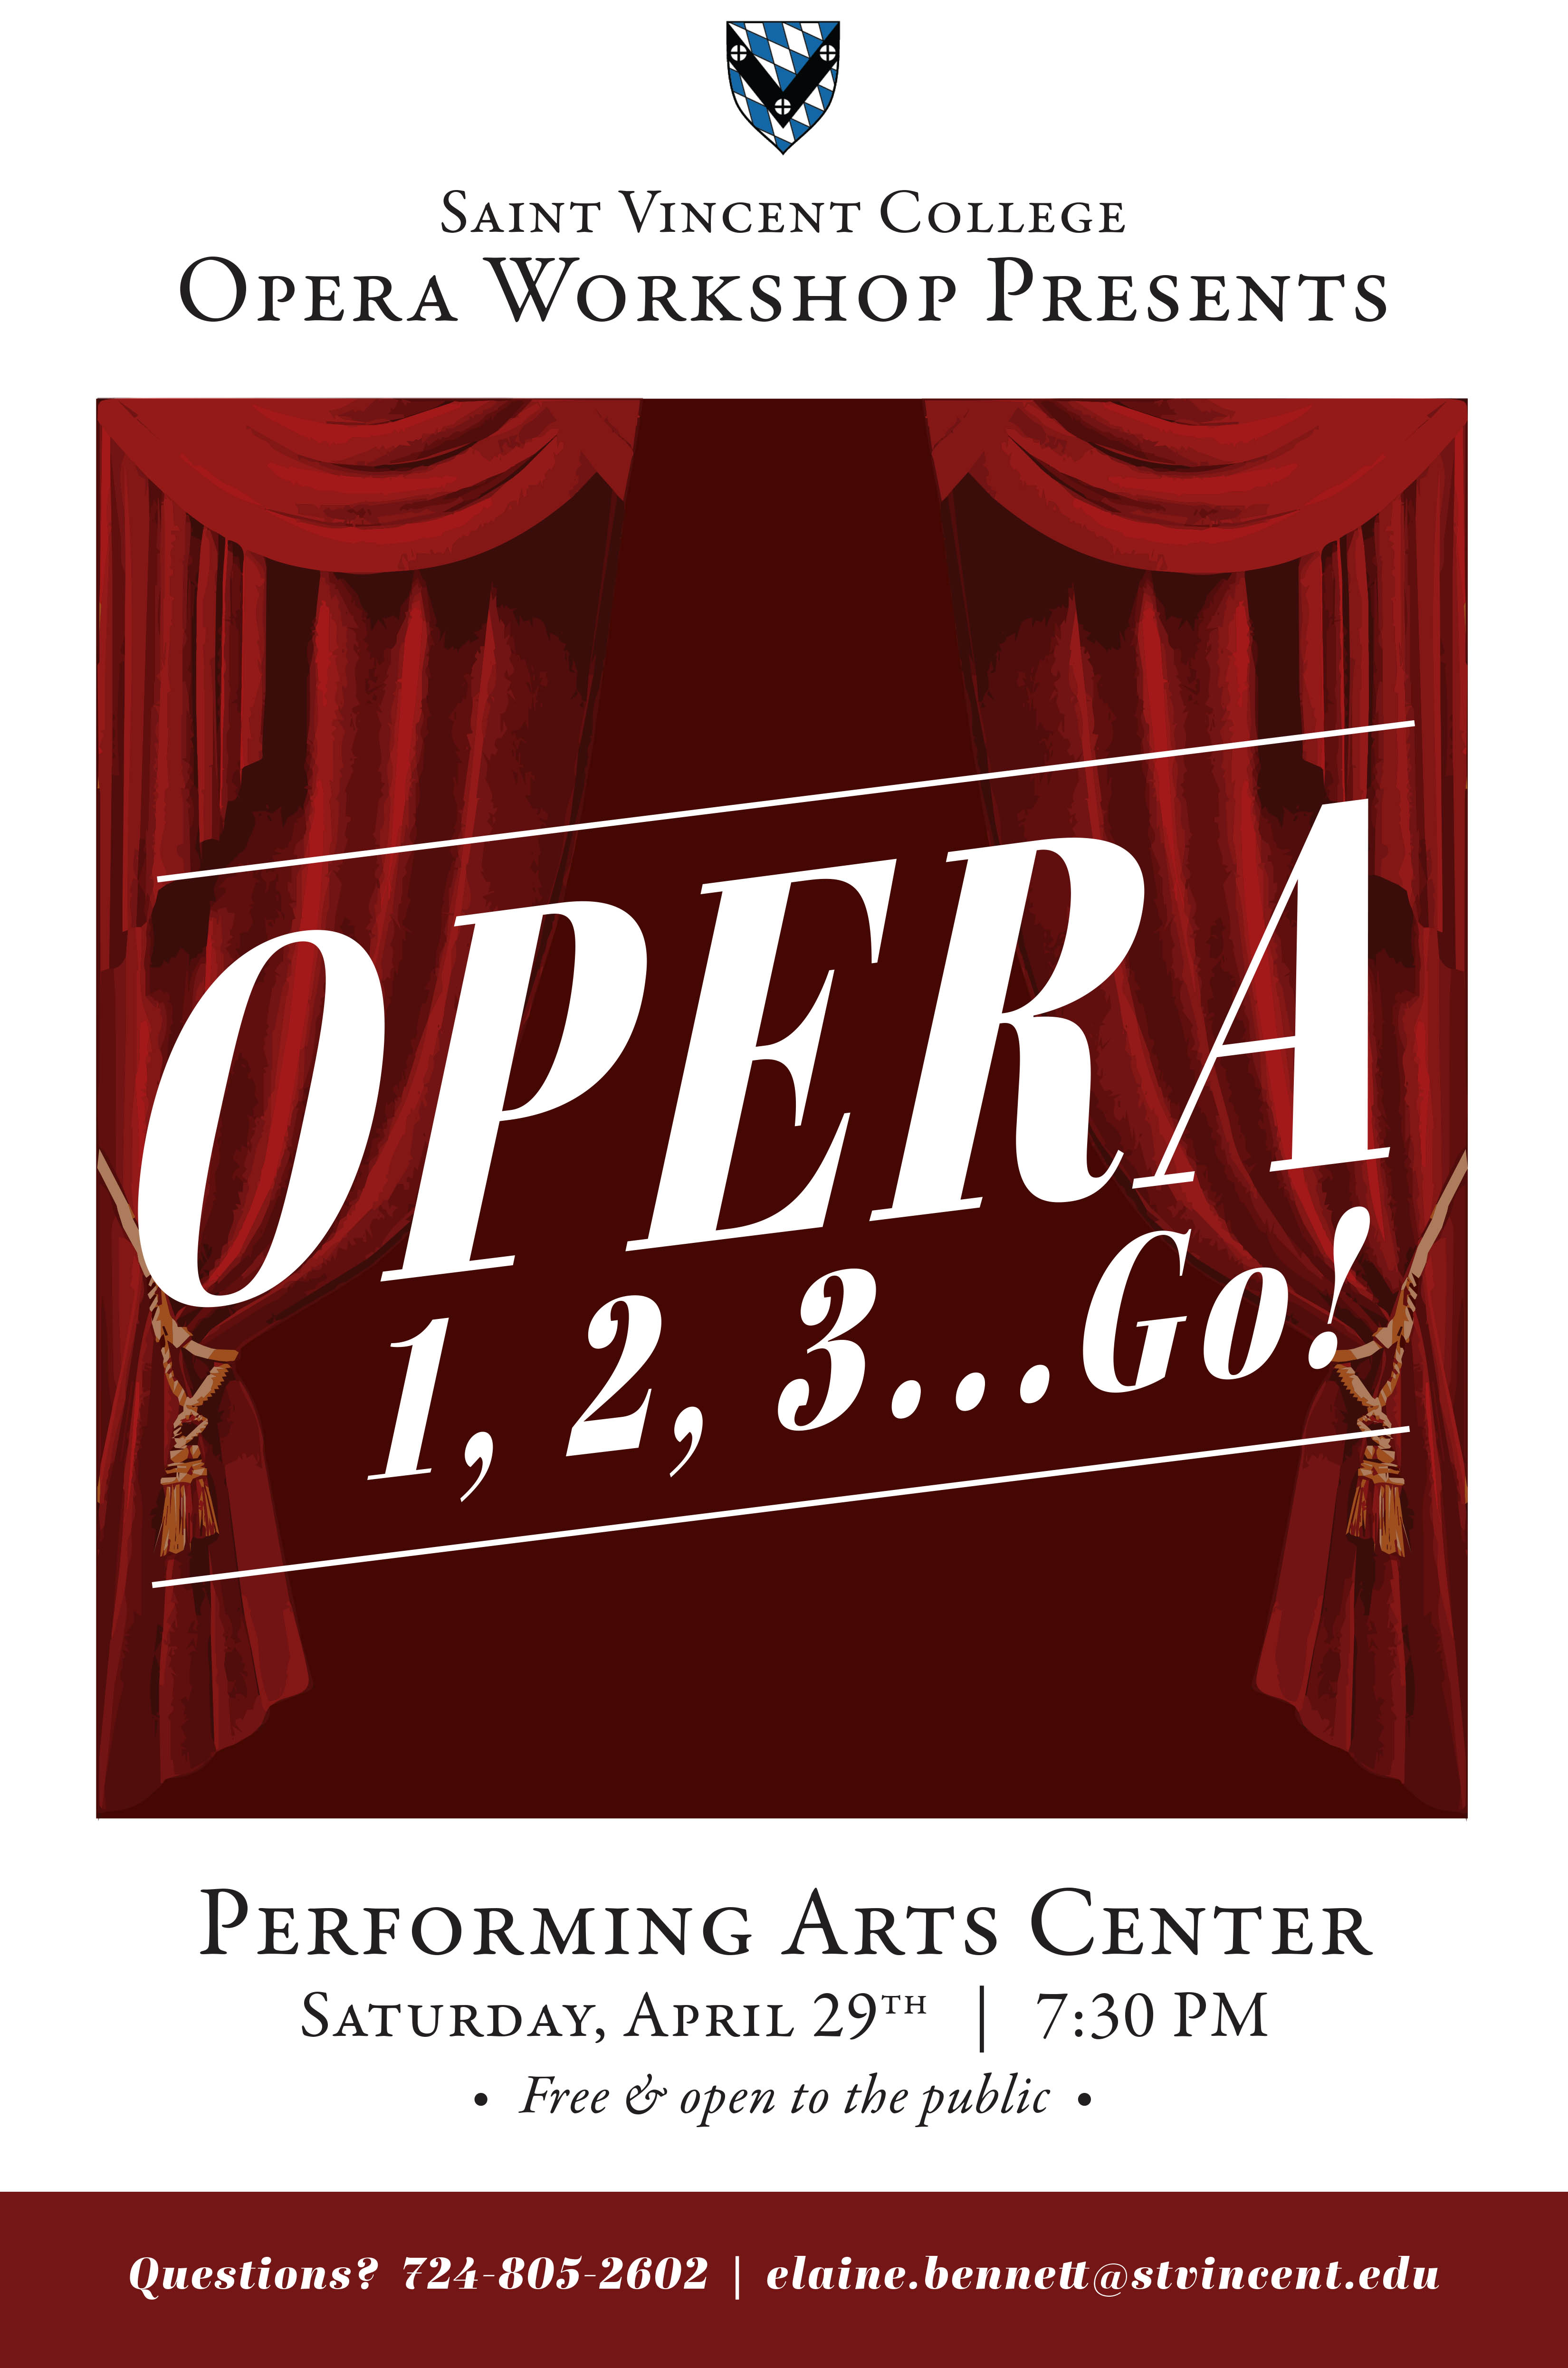 SVC opera workshop to present “Opera 1, 2, 3…Go!” performance